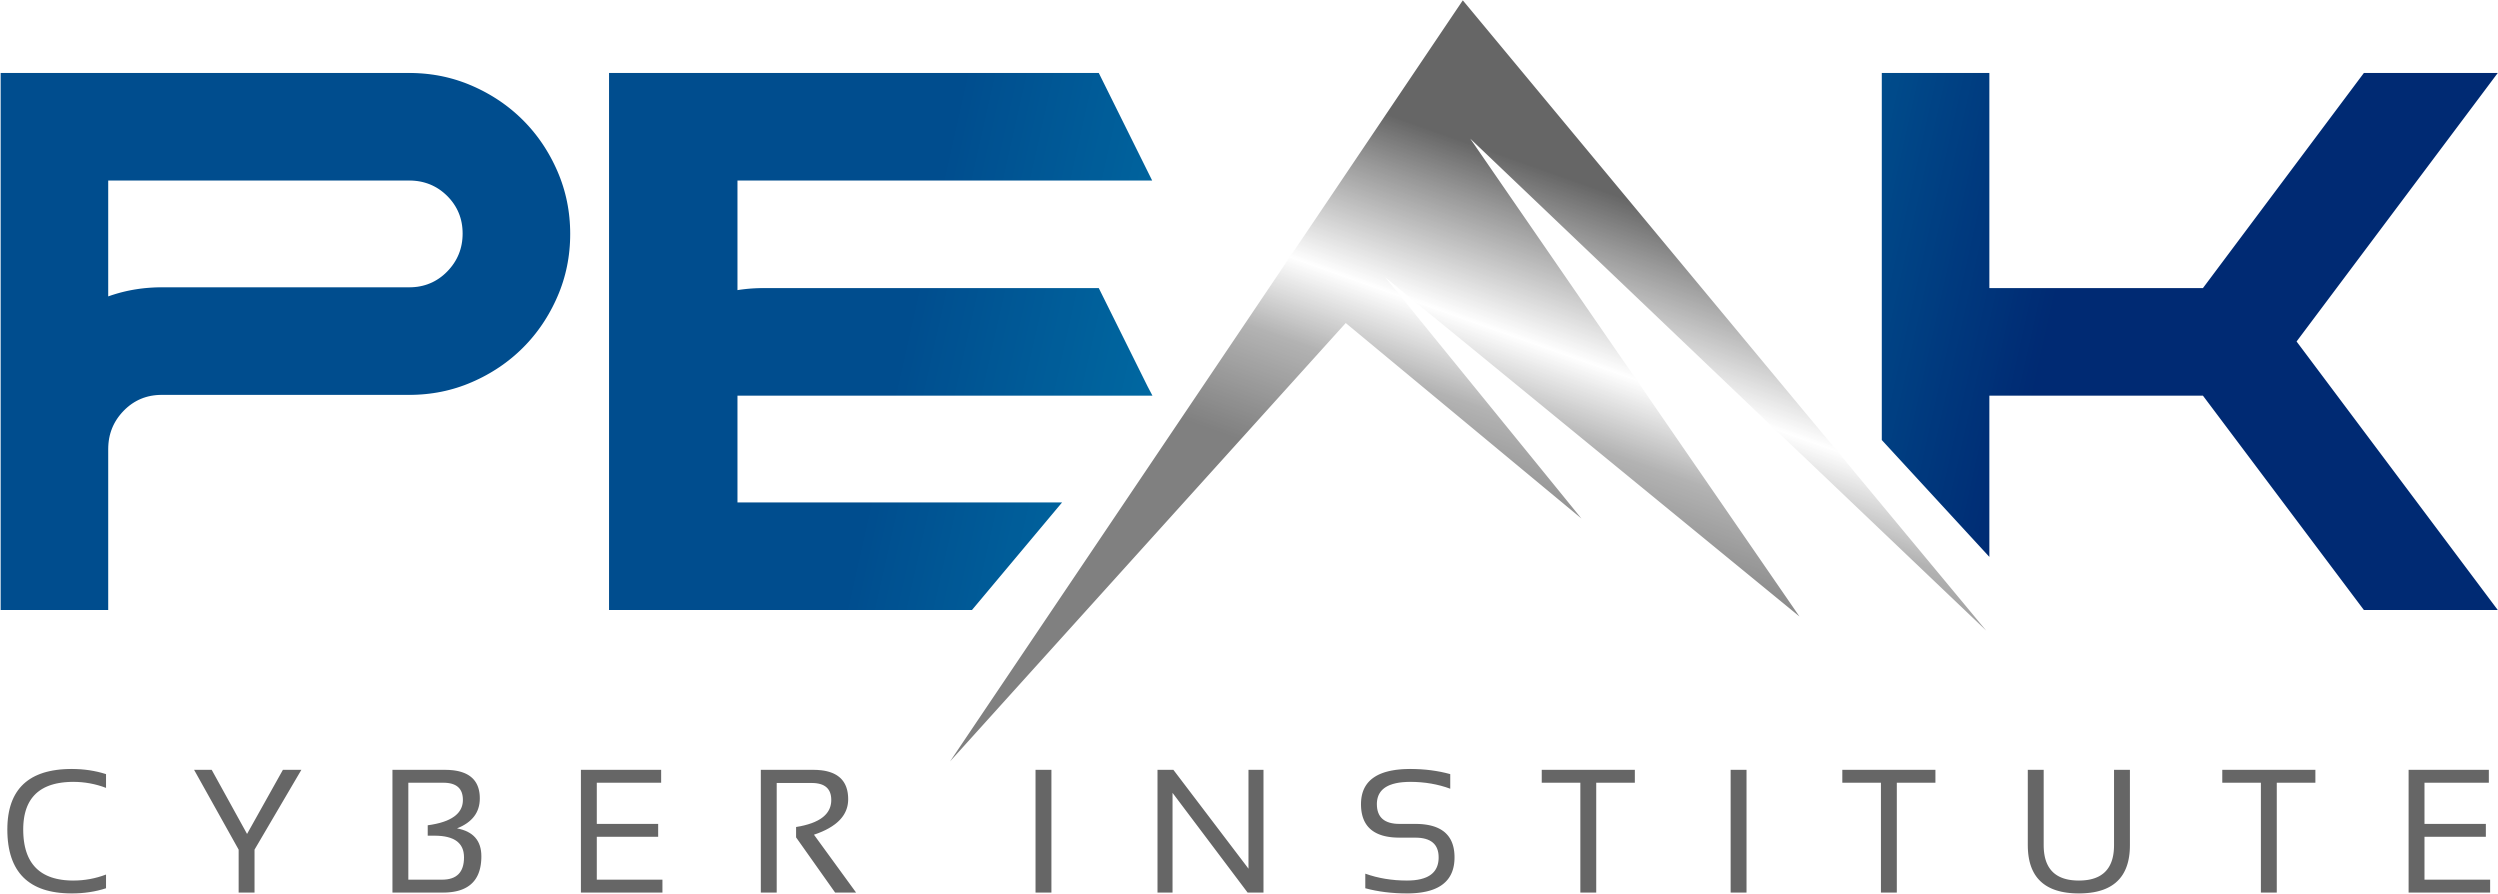 Peak Cyber Institute logo